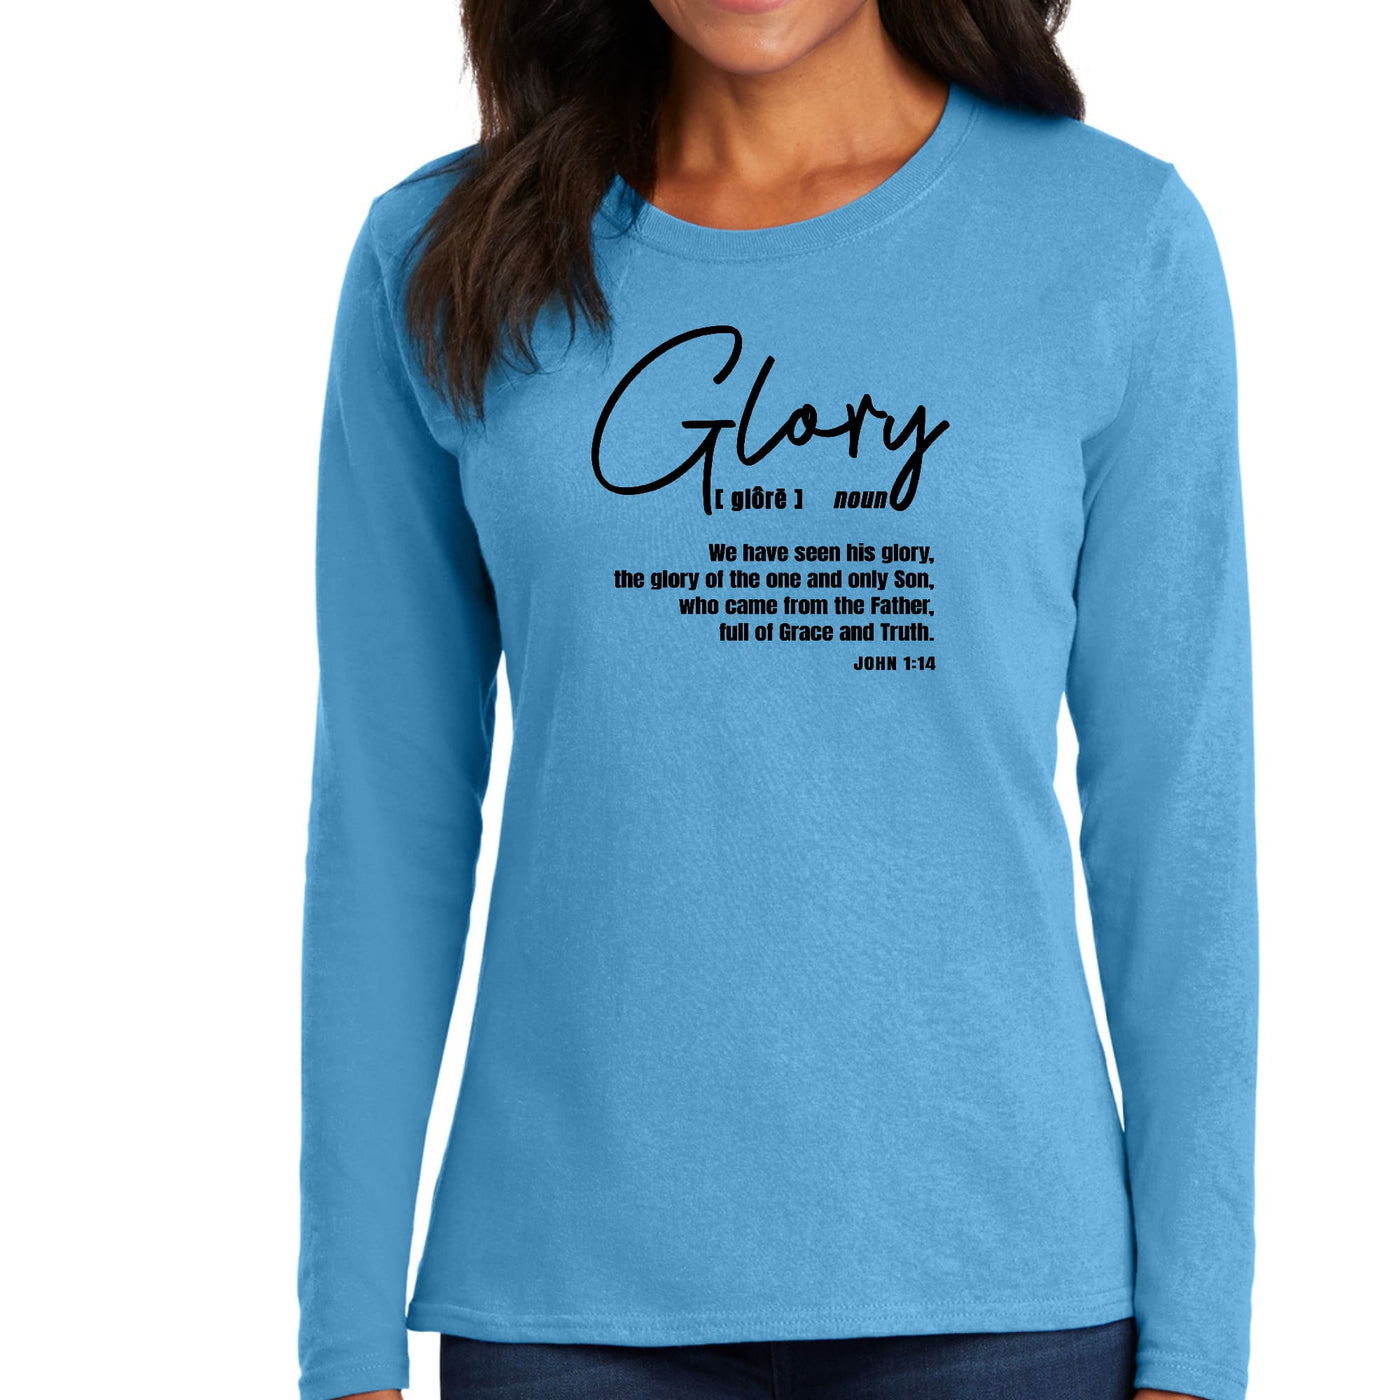 Womens Long Sleeve Graphic T-shirt Glory - Christian Inspiration, - Womens